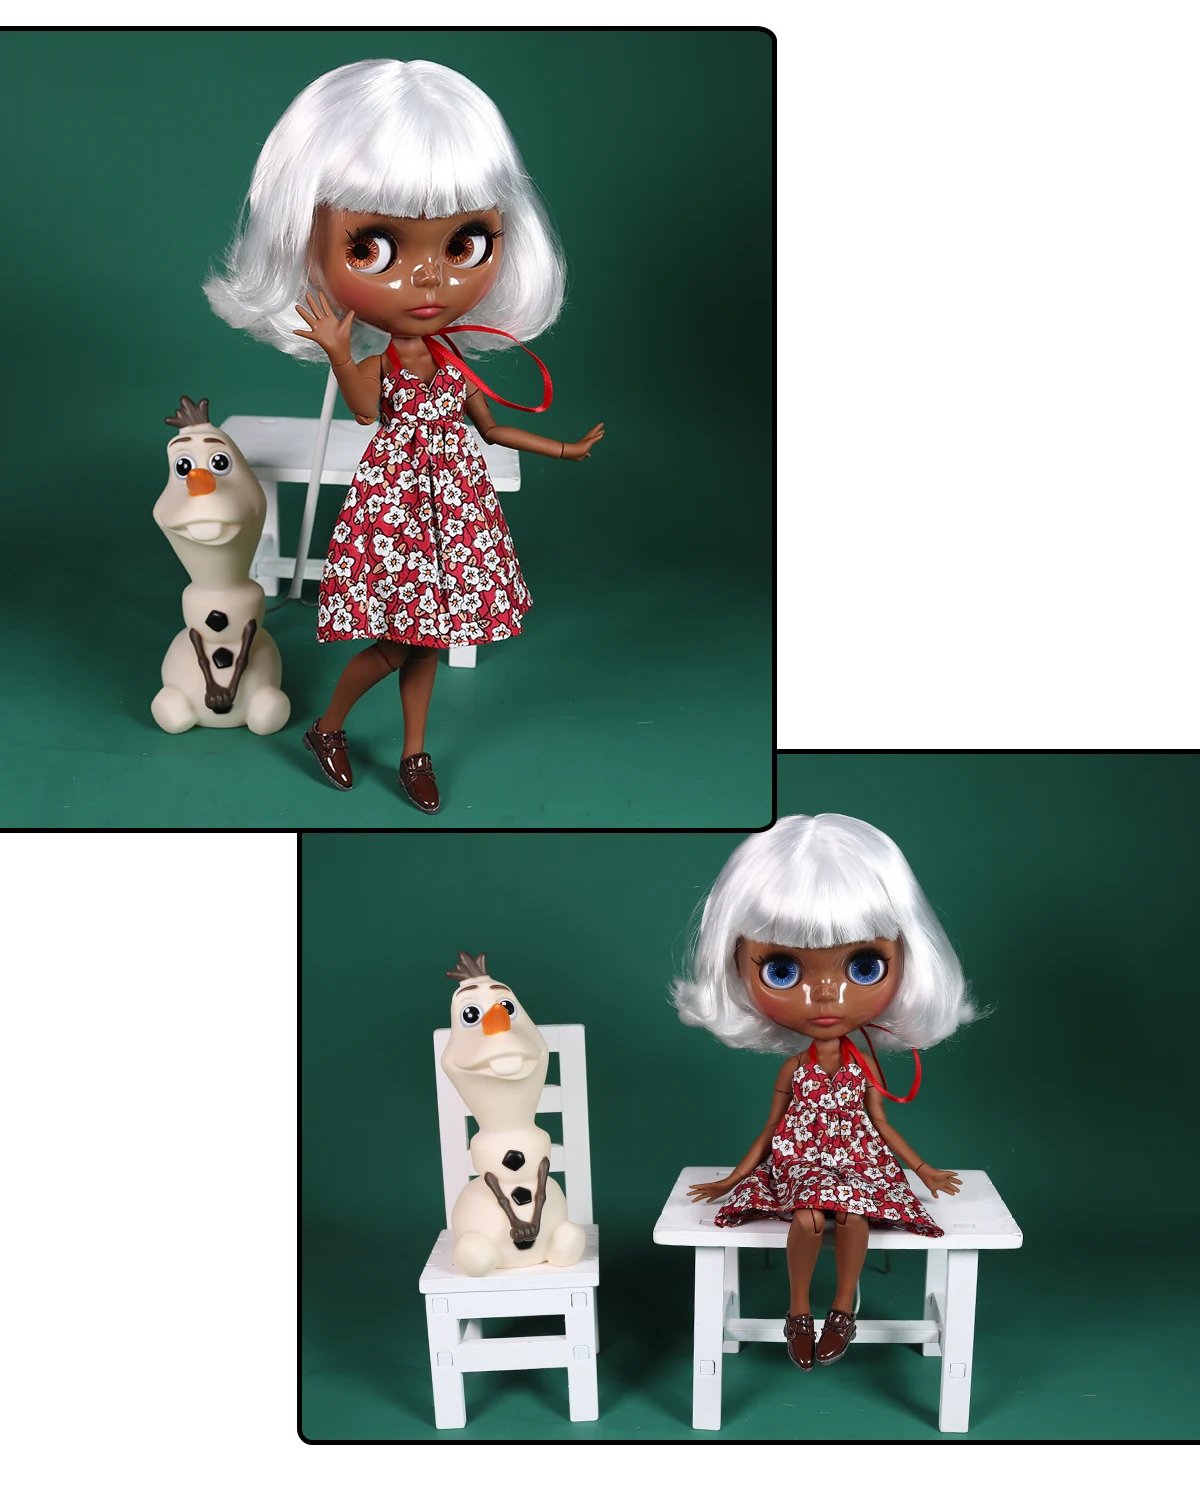 Bobbie – Premium Custom Neo Blythe Doll with White Hair, Black Skin & Shiny Cute Face 1